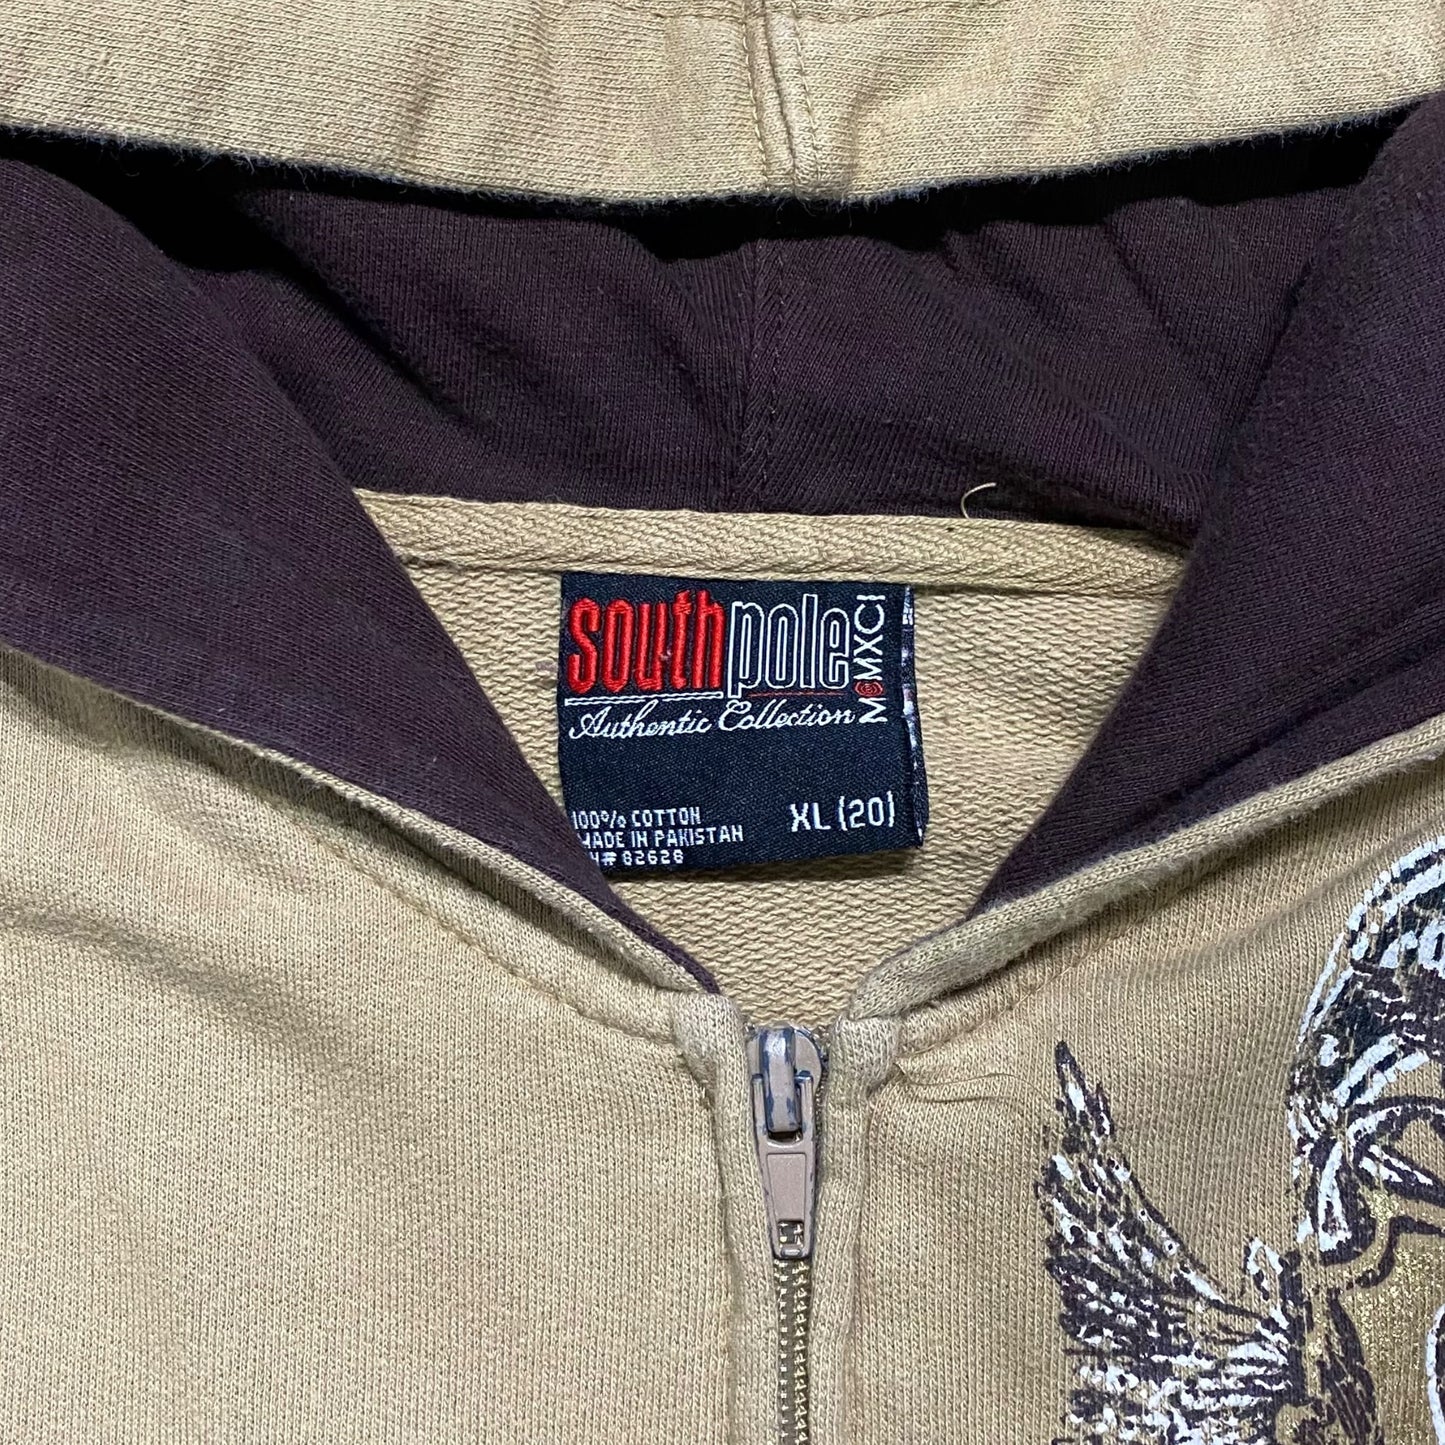 "SOUTHPOLE" Logo design full zip hoodie